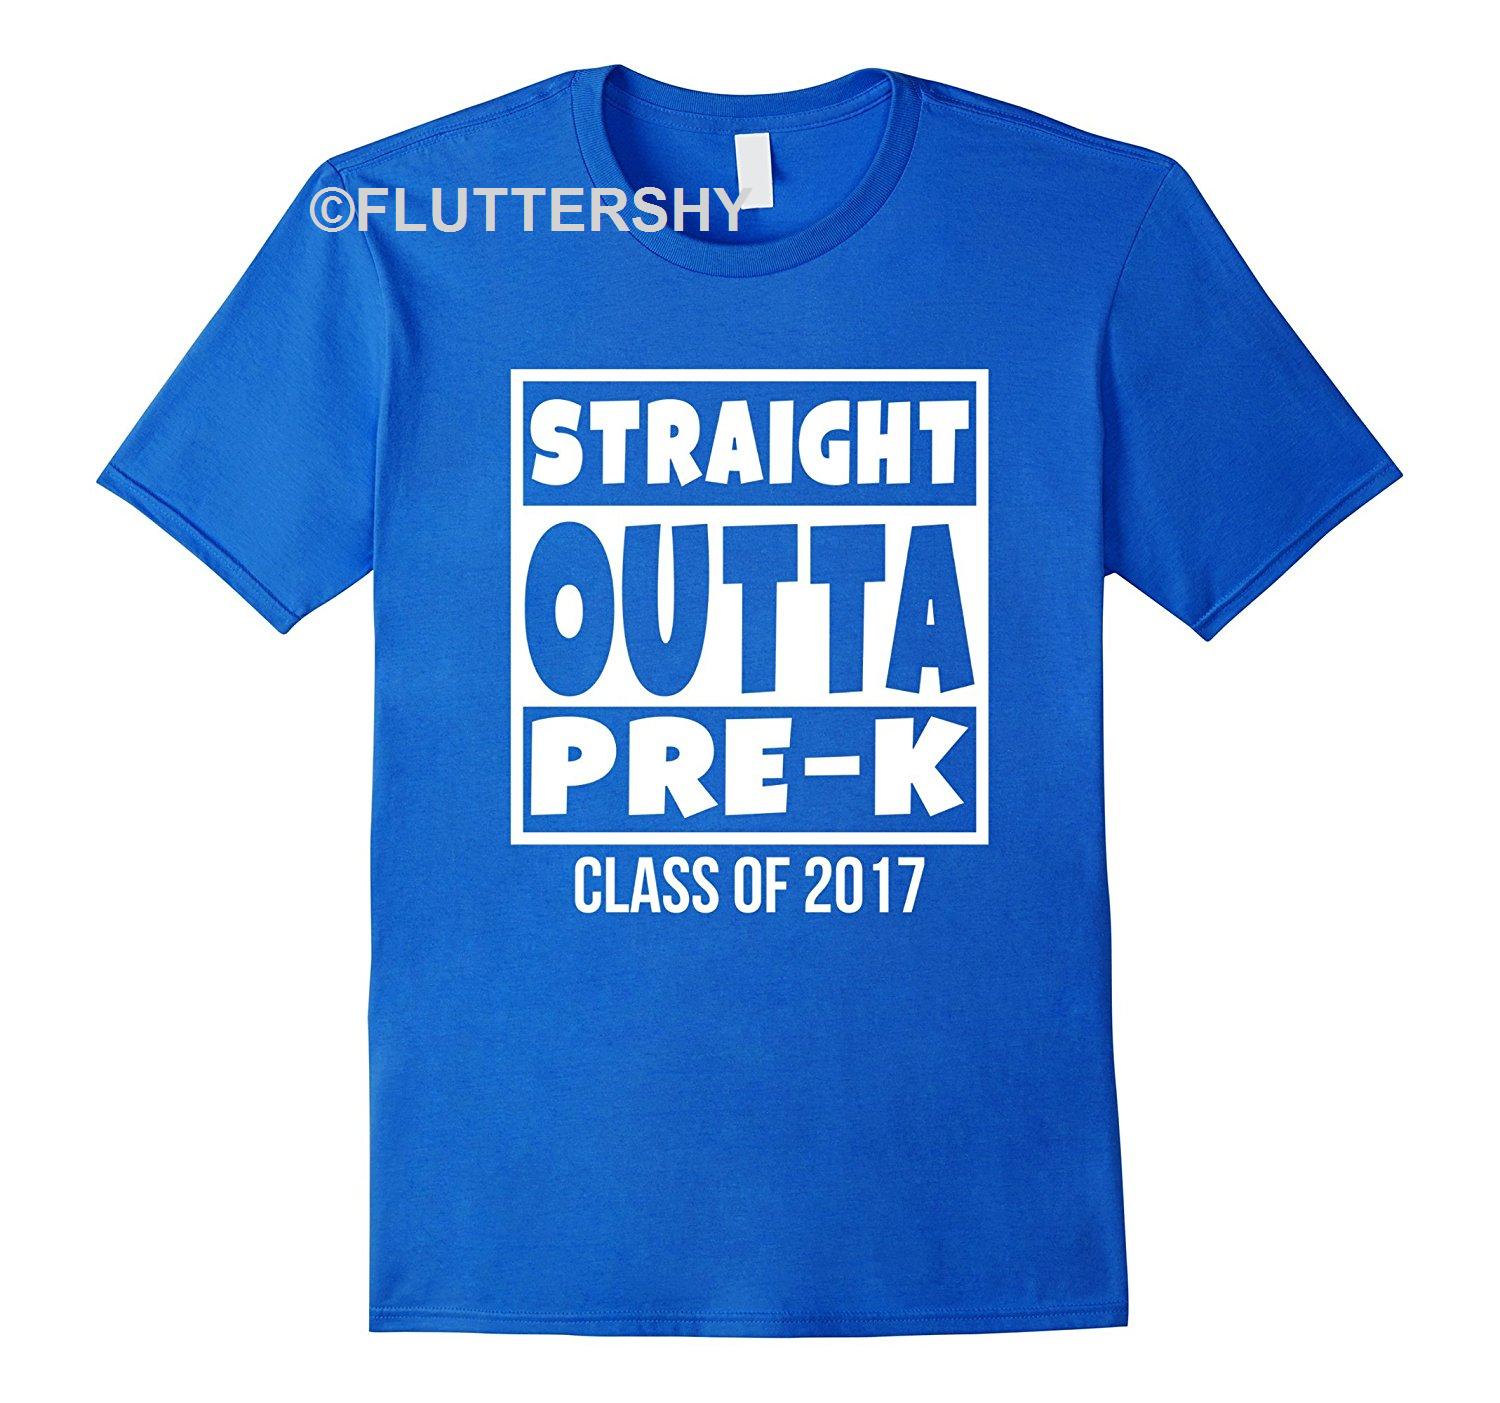 Outstanding Find Straight Outta Pre-k Preschool Graduation T-shirt